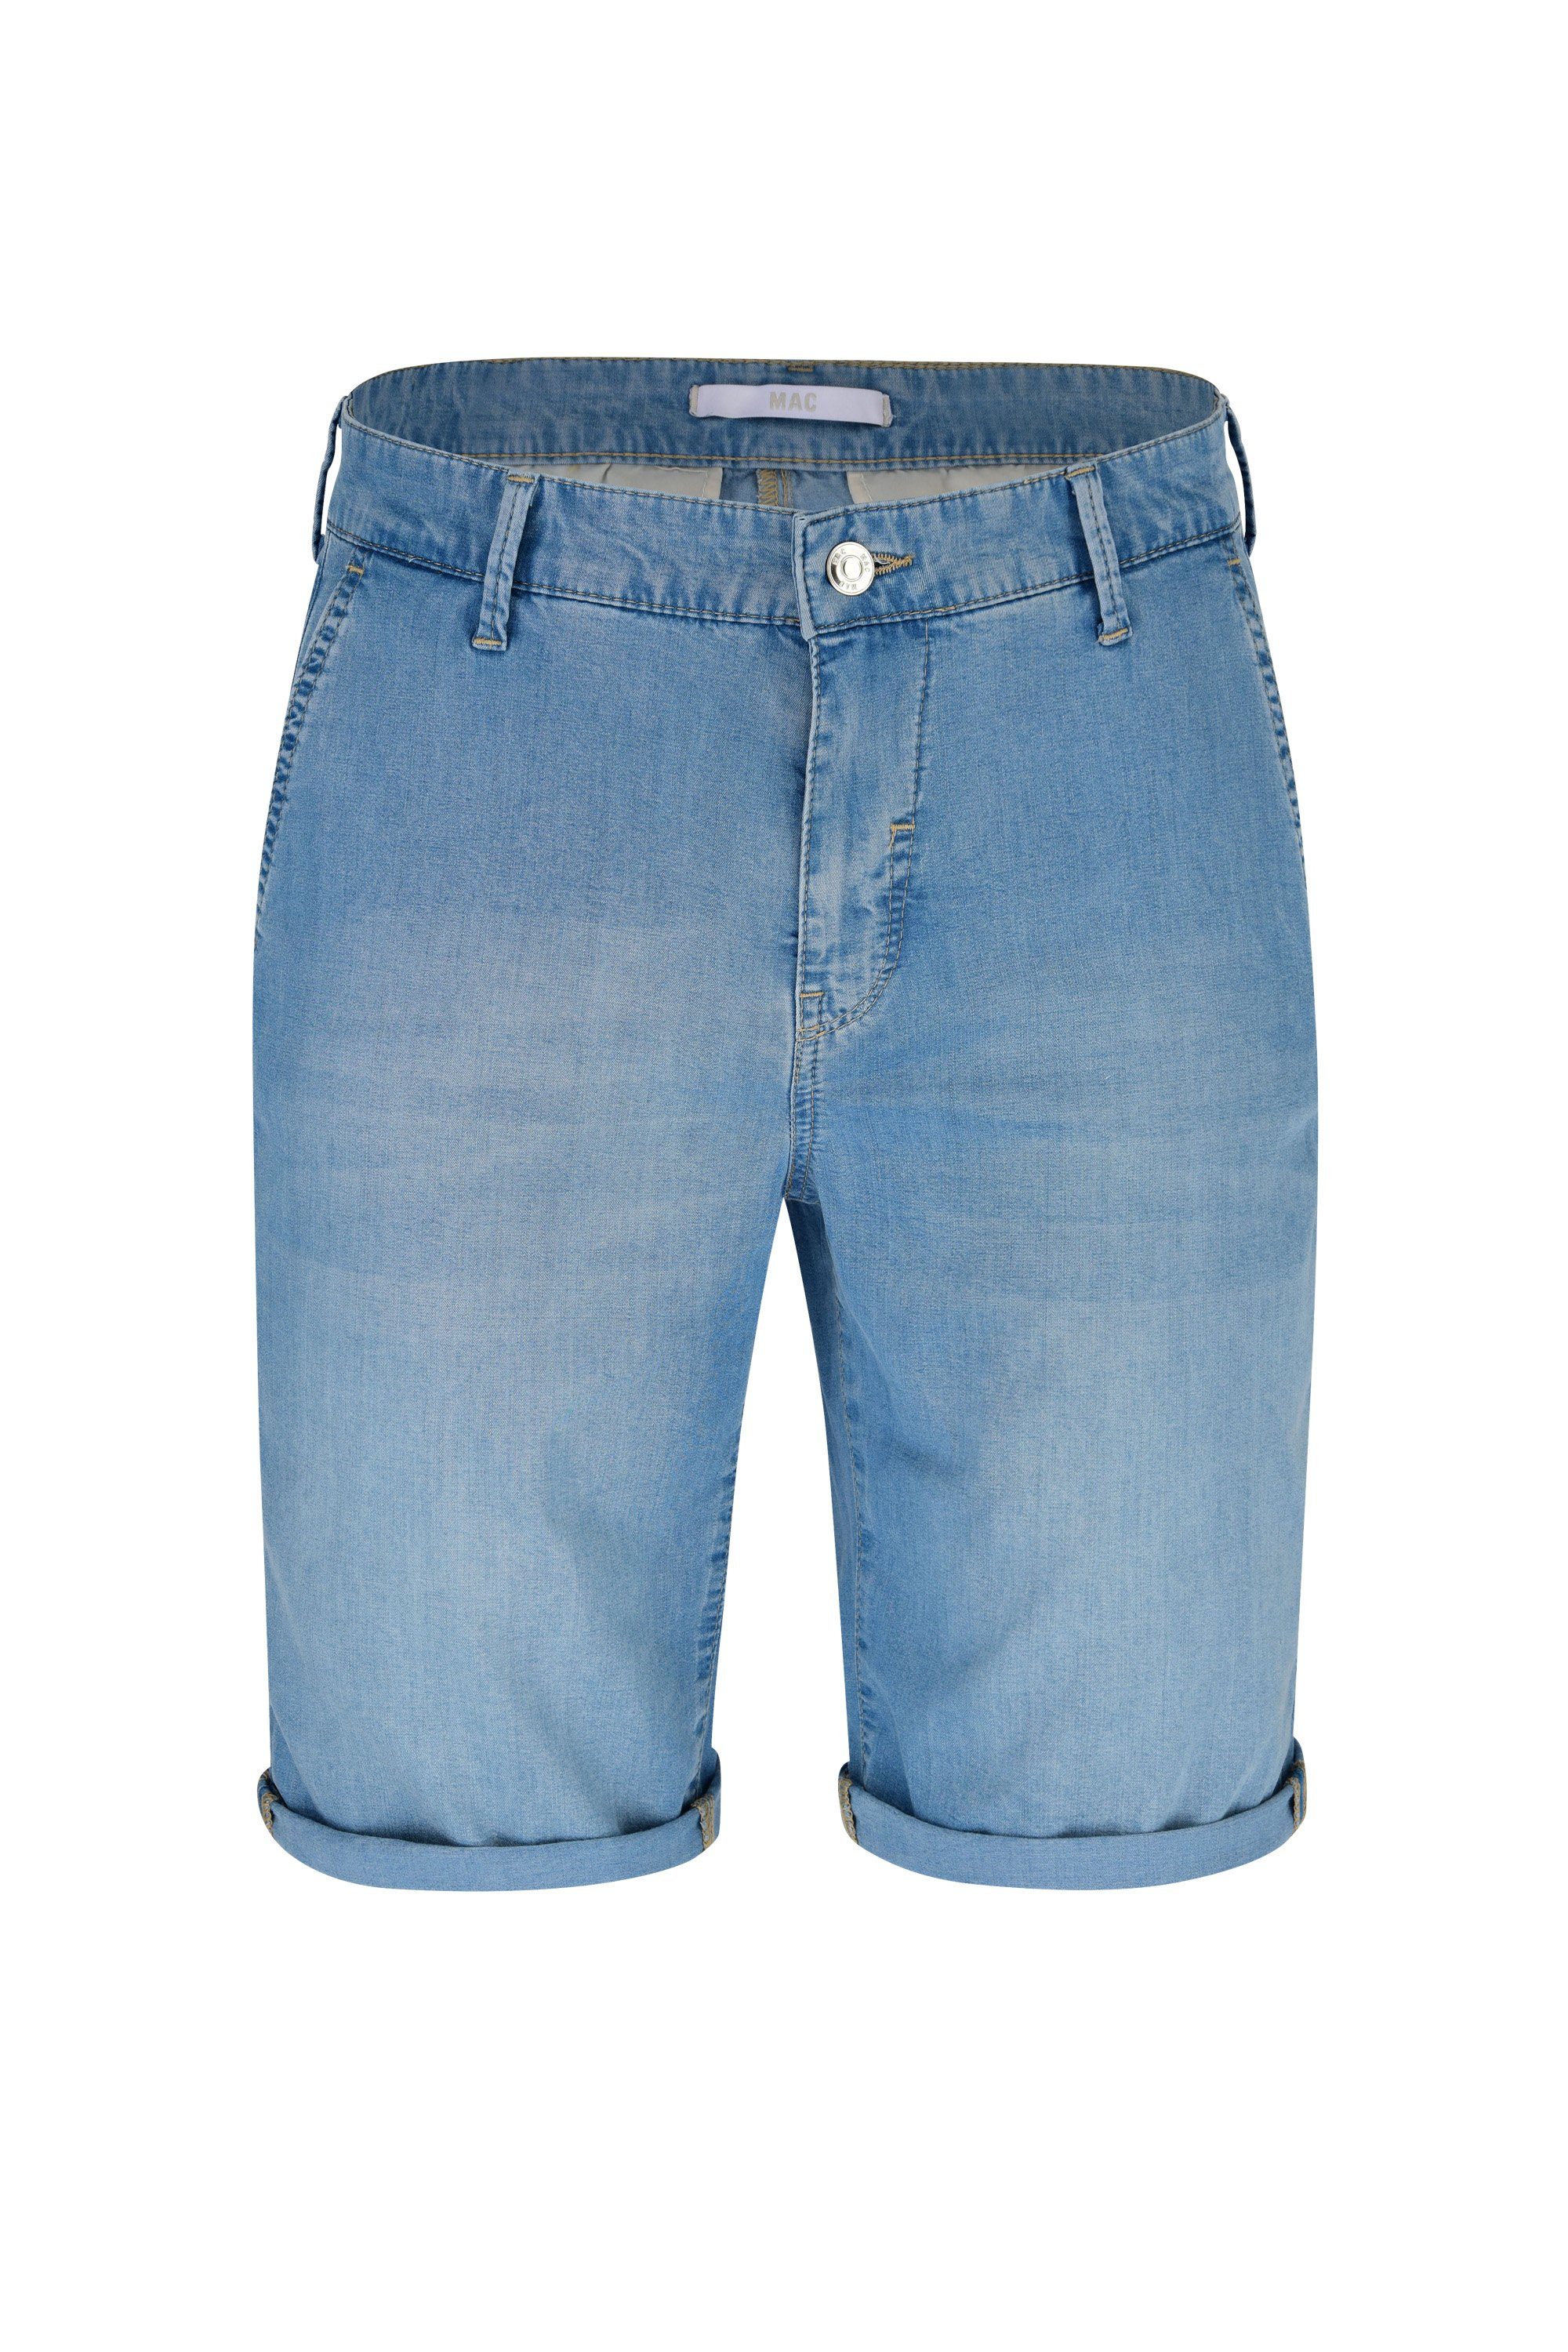 MAC Stretch-Jeans MAC CHINO SHORTS basic blue wash 3069-90-0317 D422 | Stretchjeans